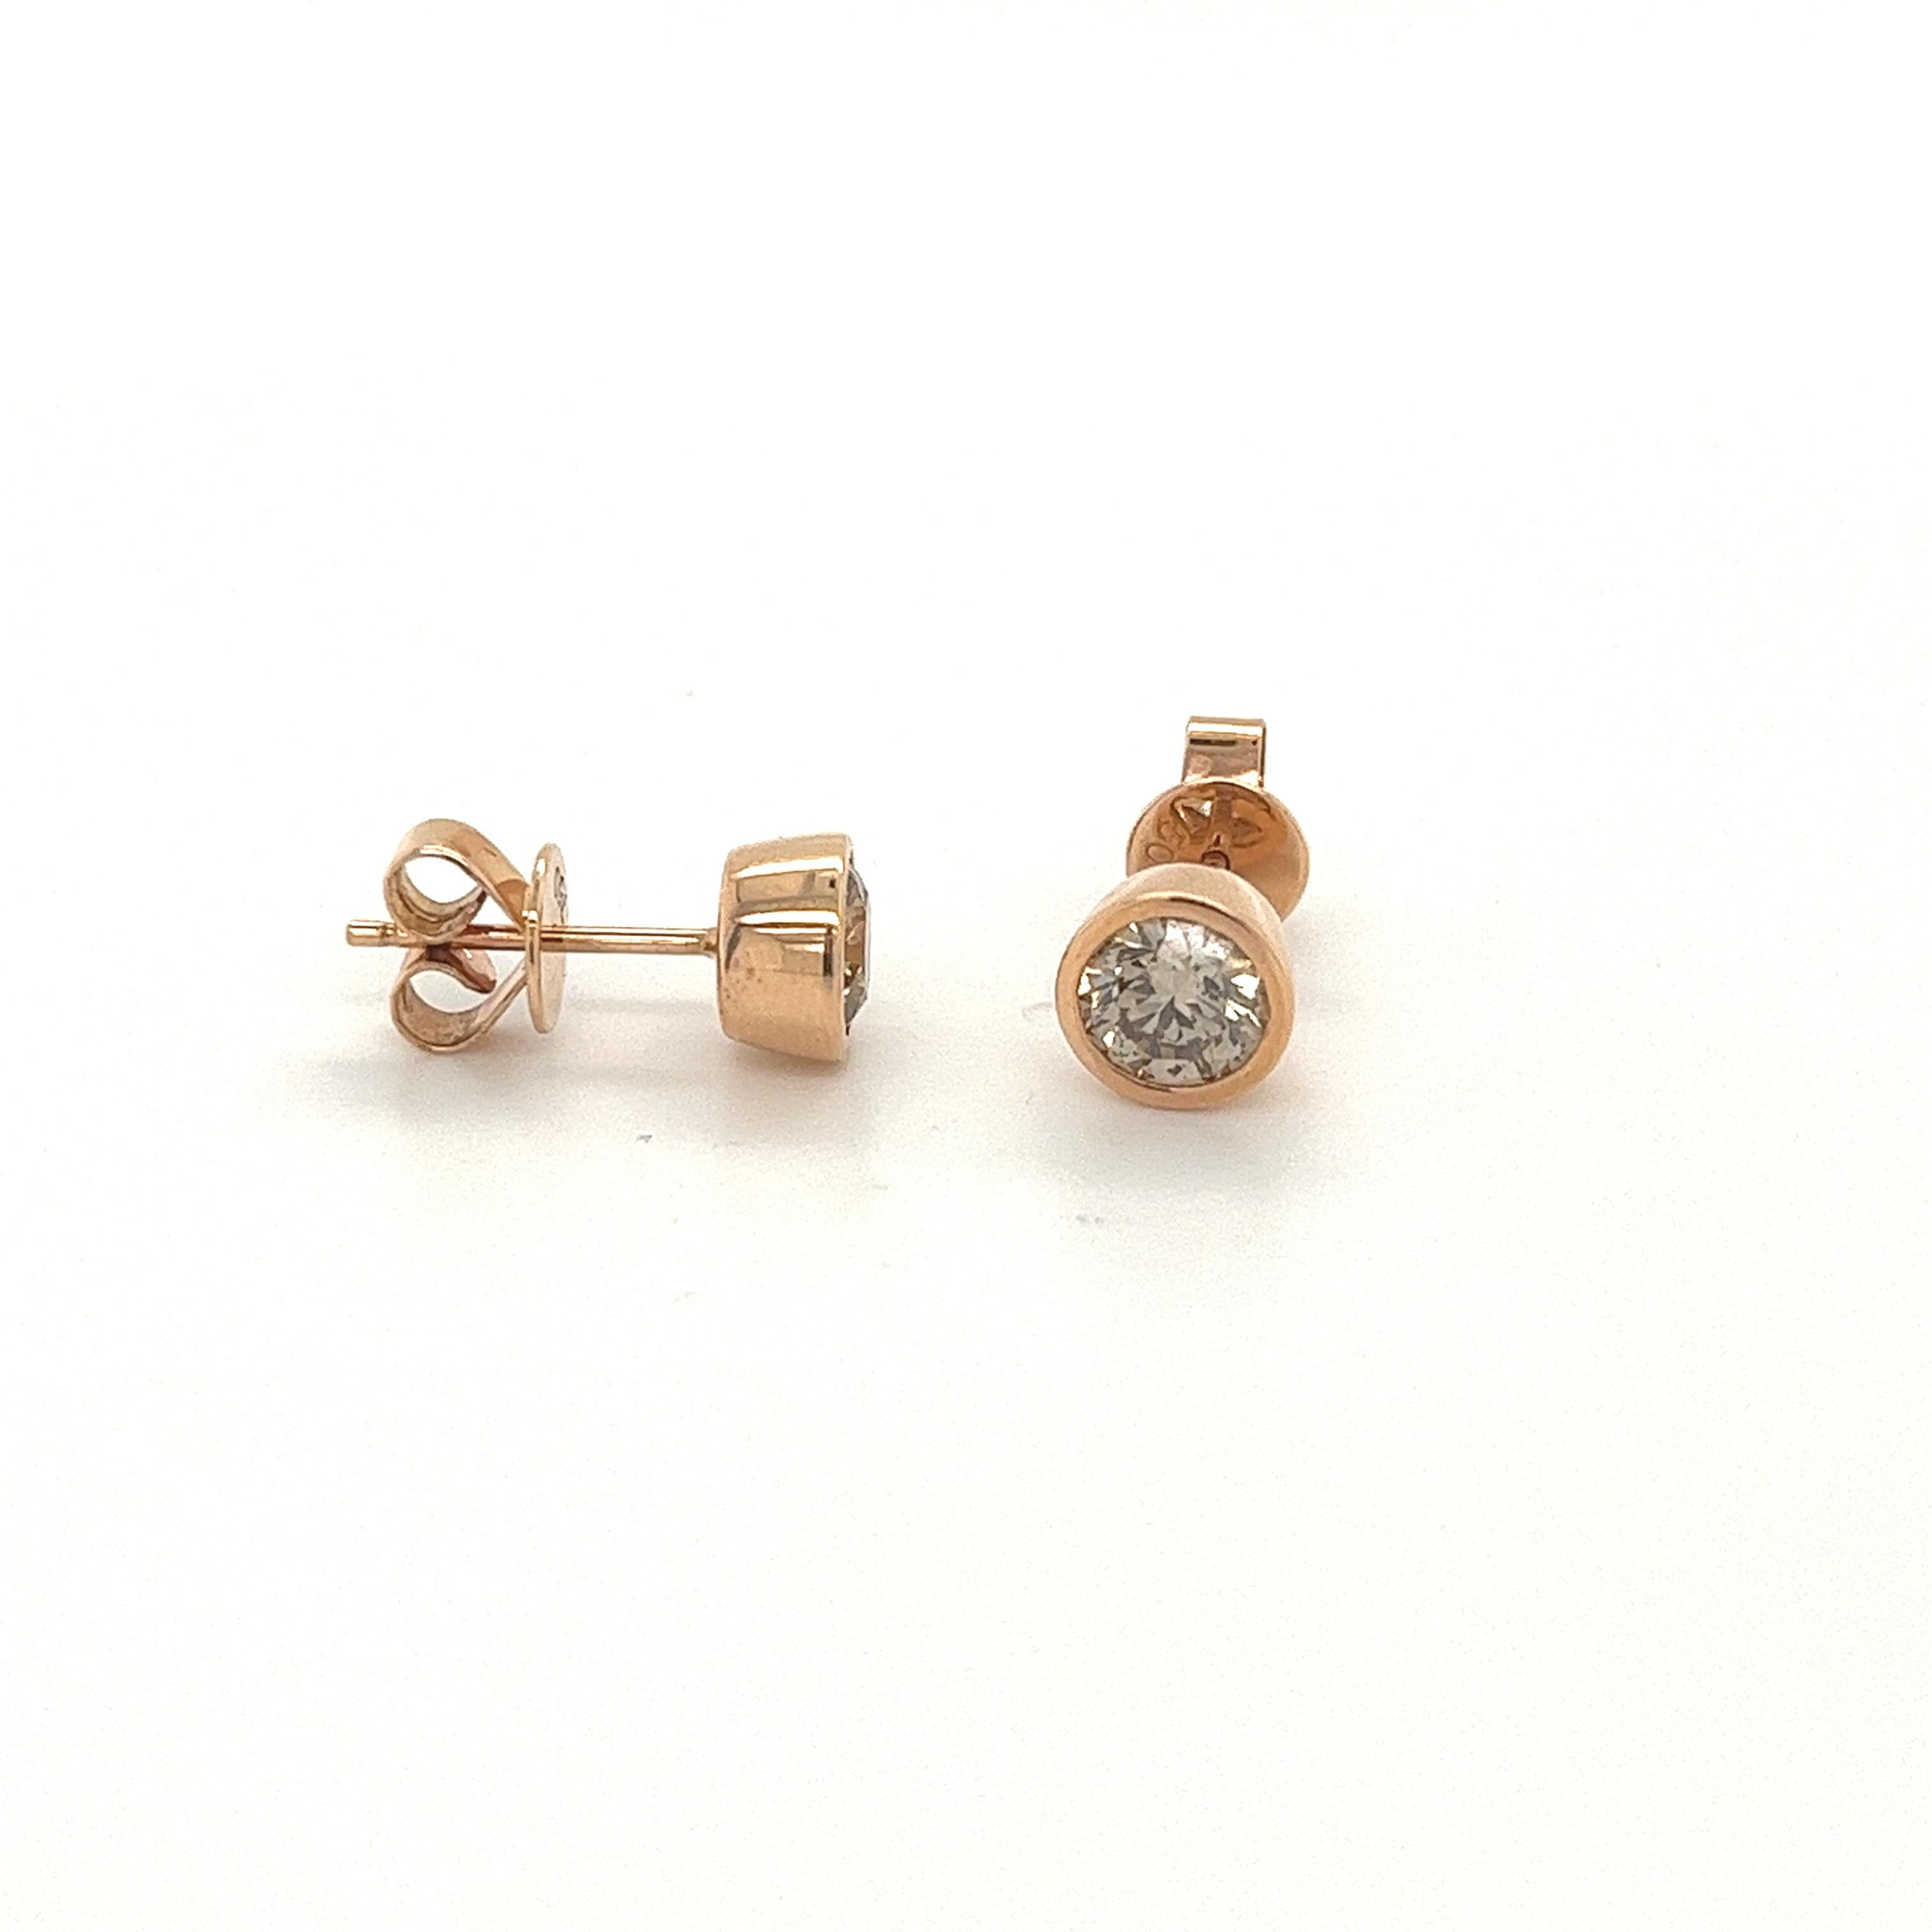 1.5 mm diamond stud earrings